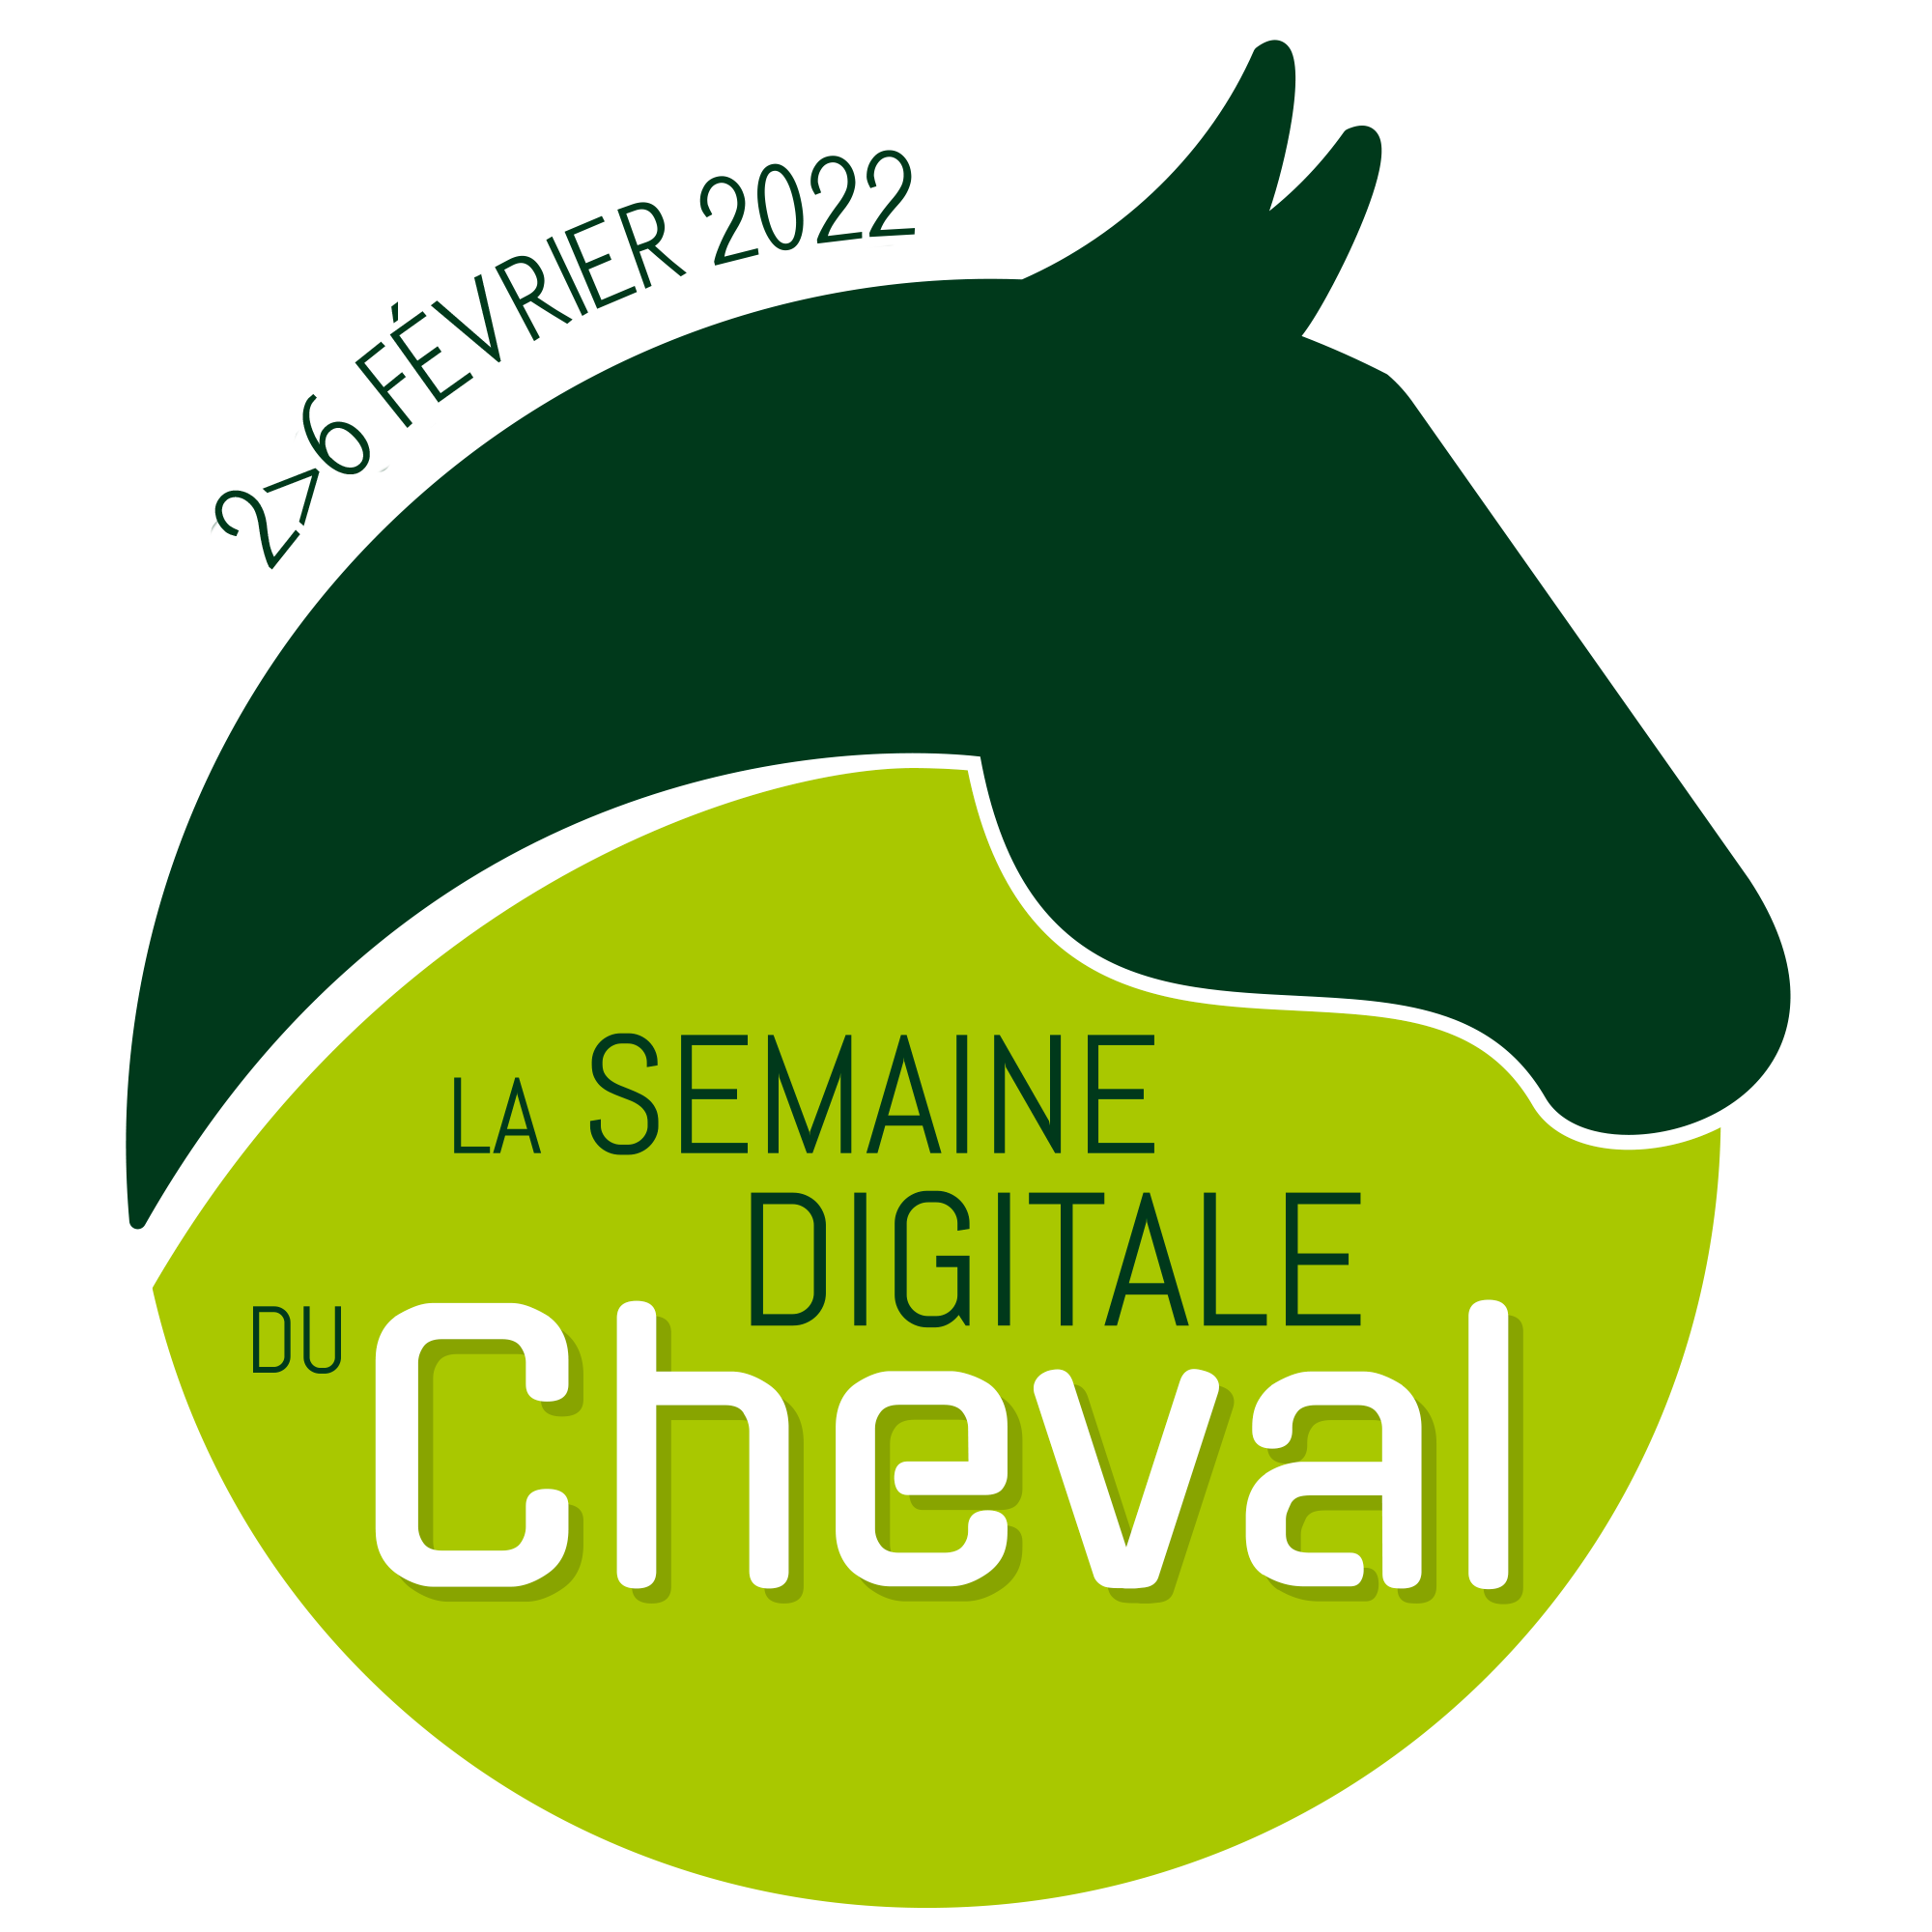 La Semaine Digitale du Cheval